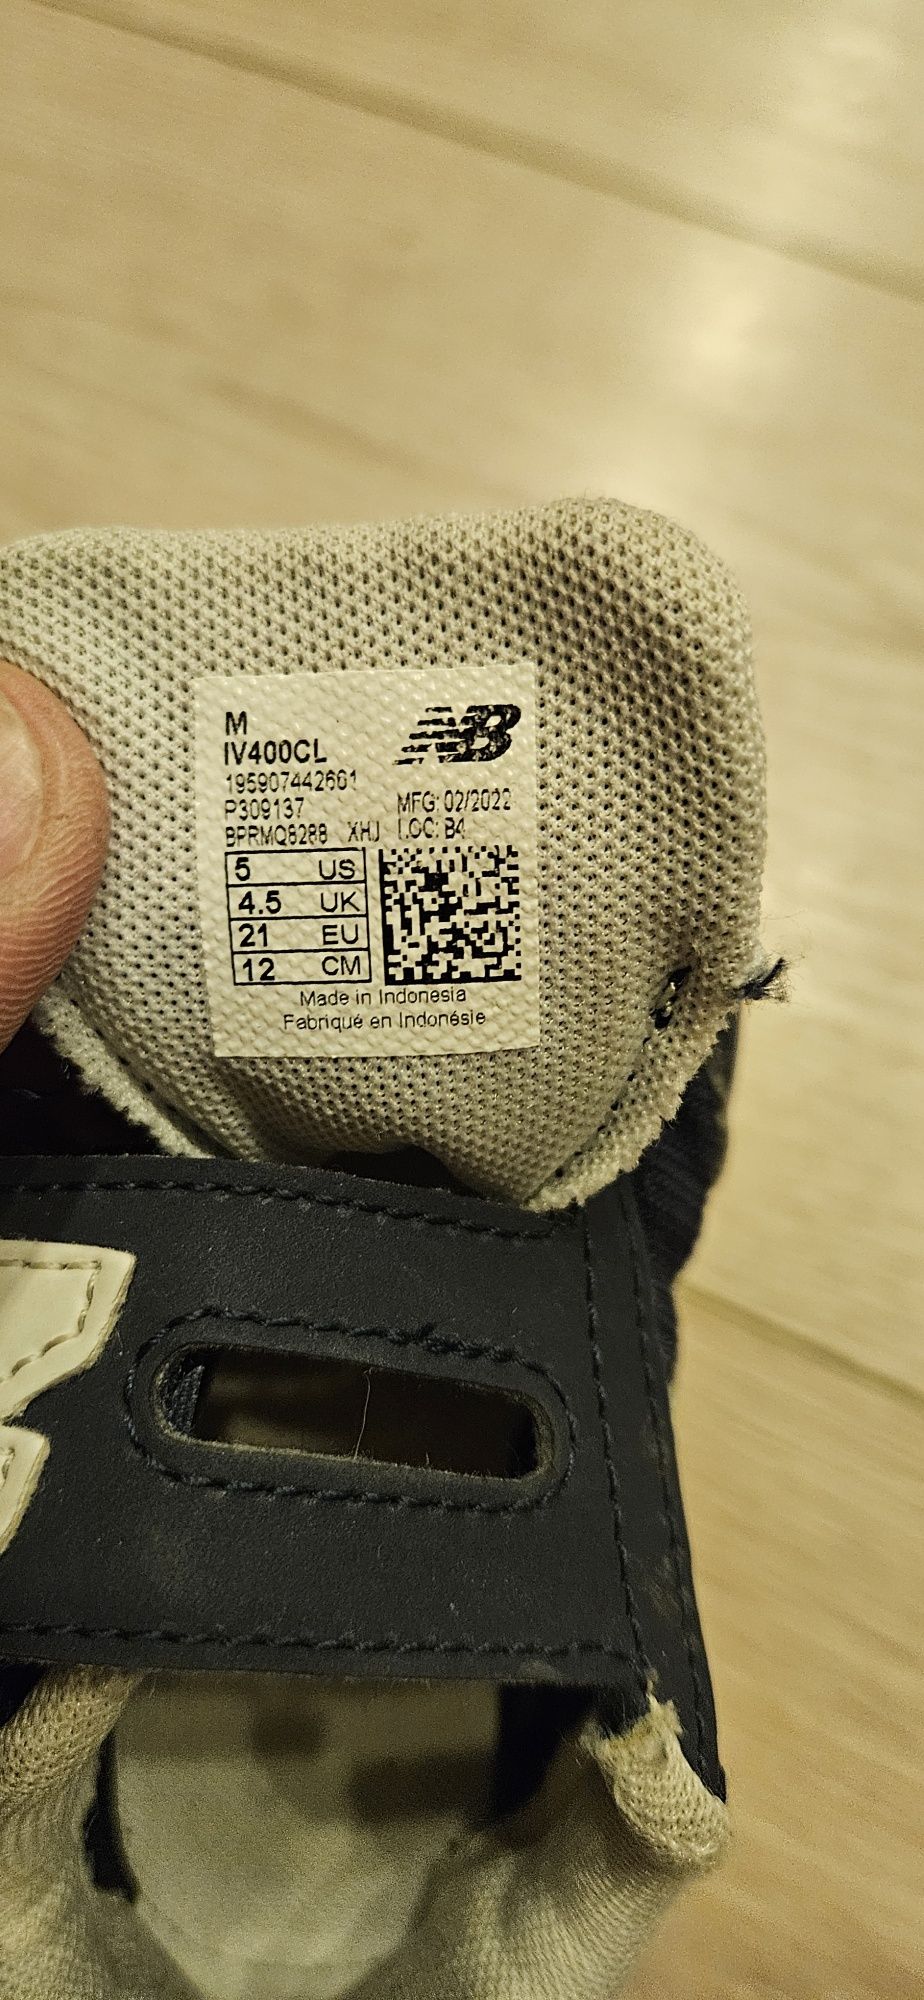 Adidasi New Balance 400  pentru  copii mărime 21/12 cm